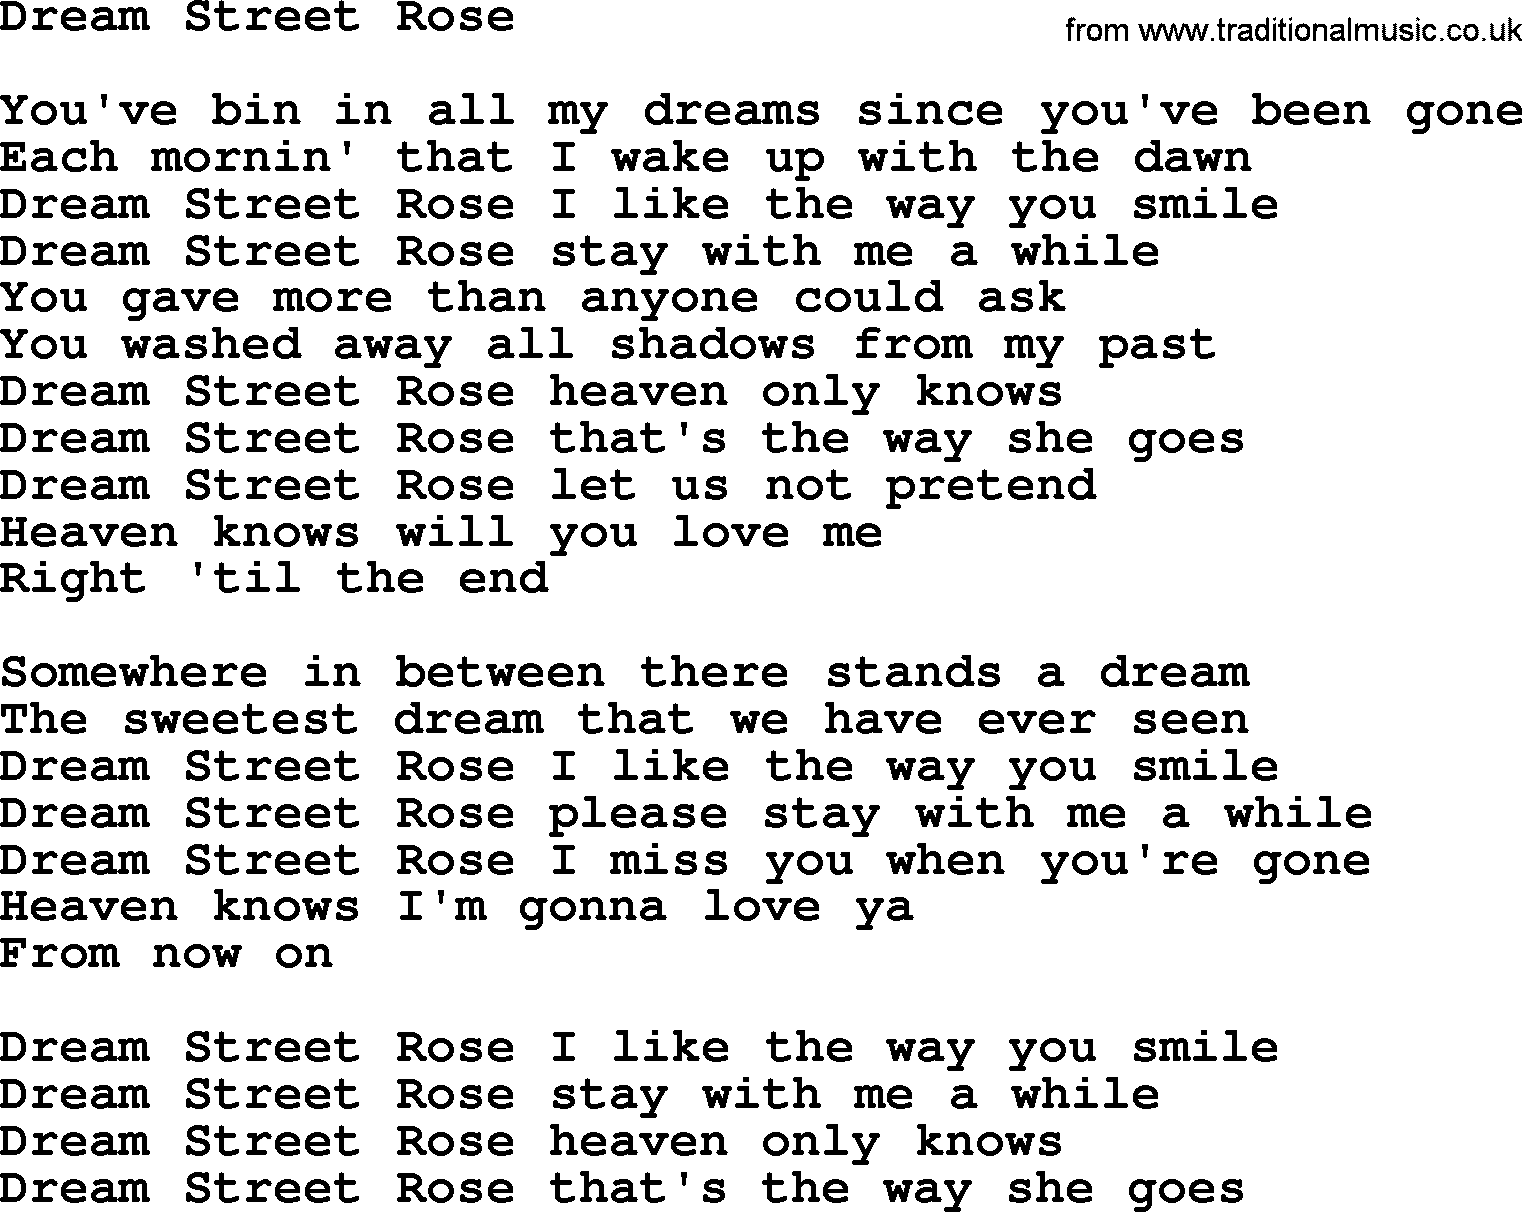 Gordon Lightfoot song Dream Street Rose, lyrics